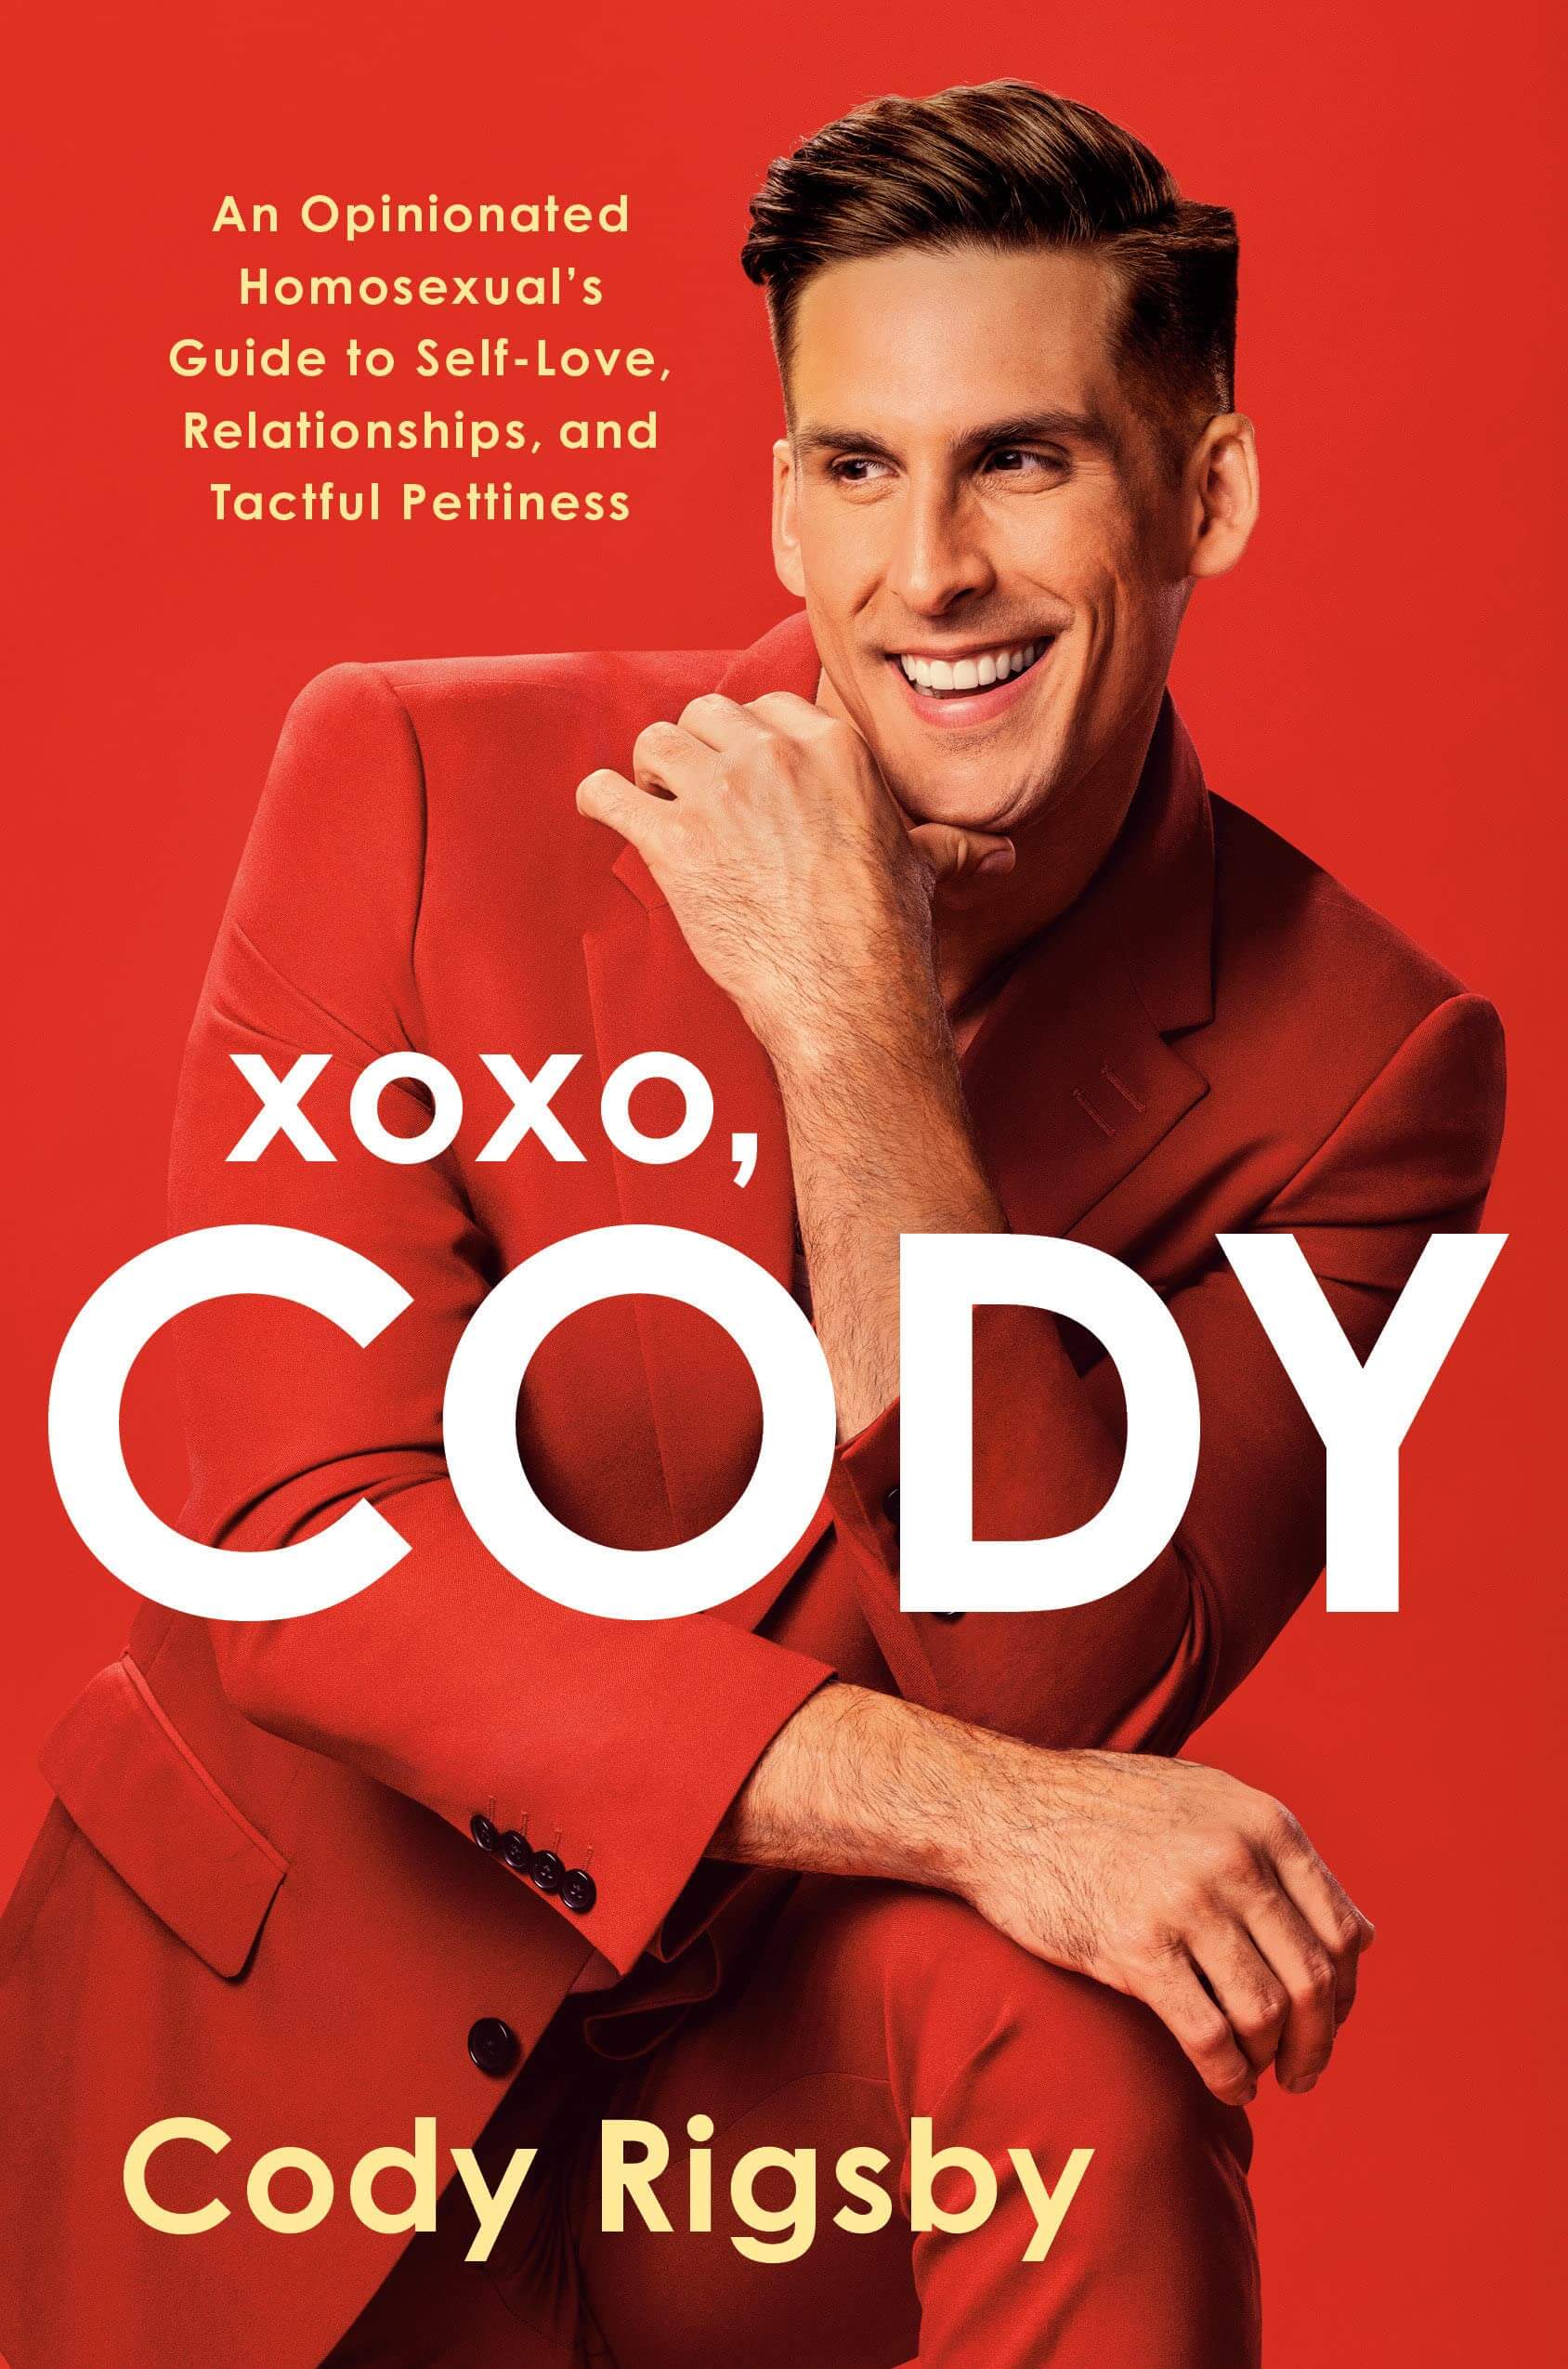 XOXO, Cody